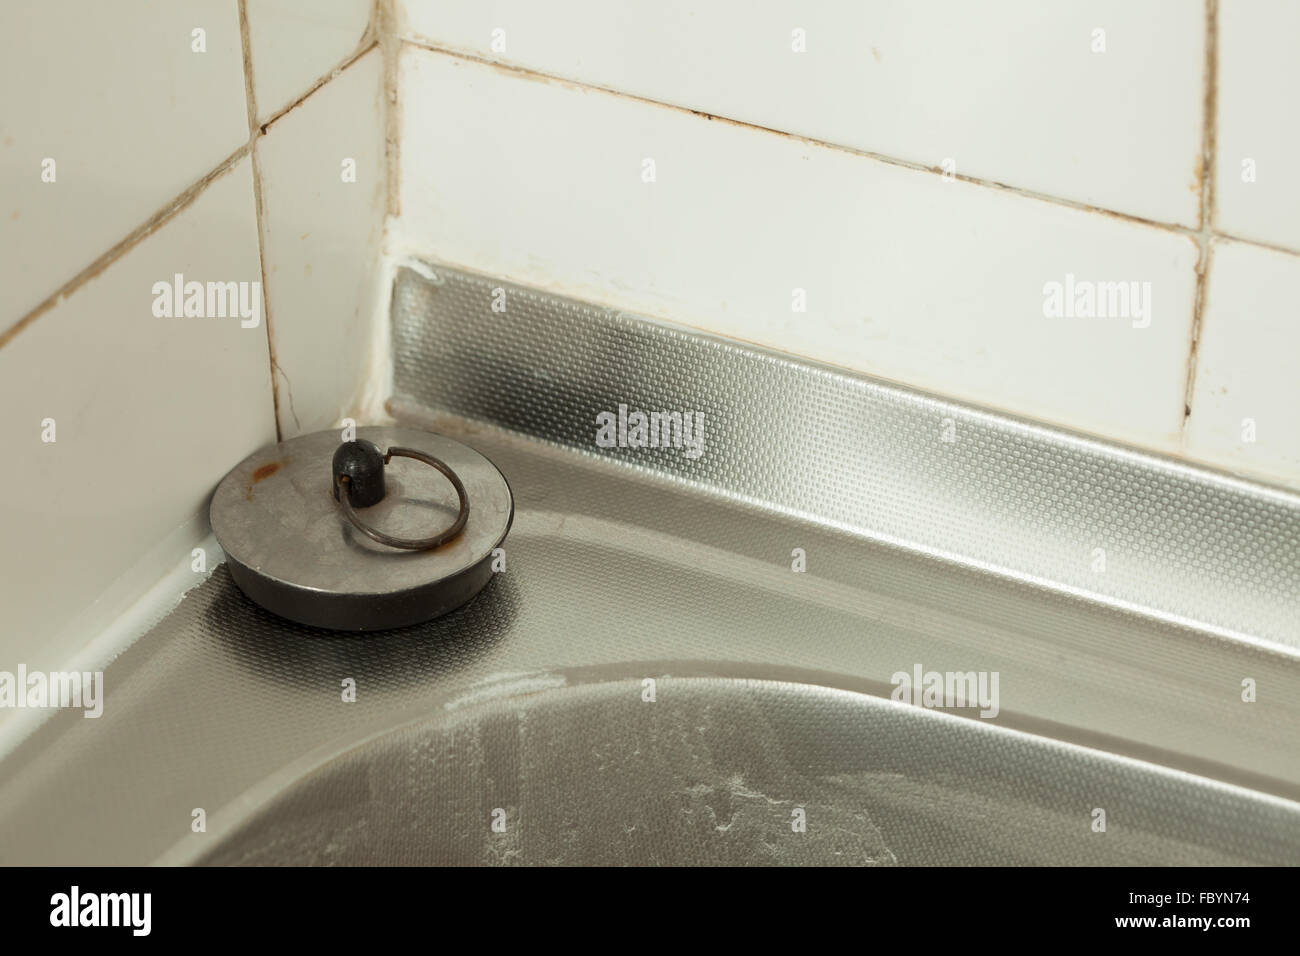 Washing dishes. Kitchen sink. Housework. Stock Photo